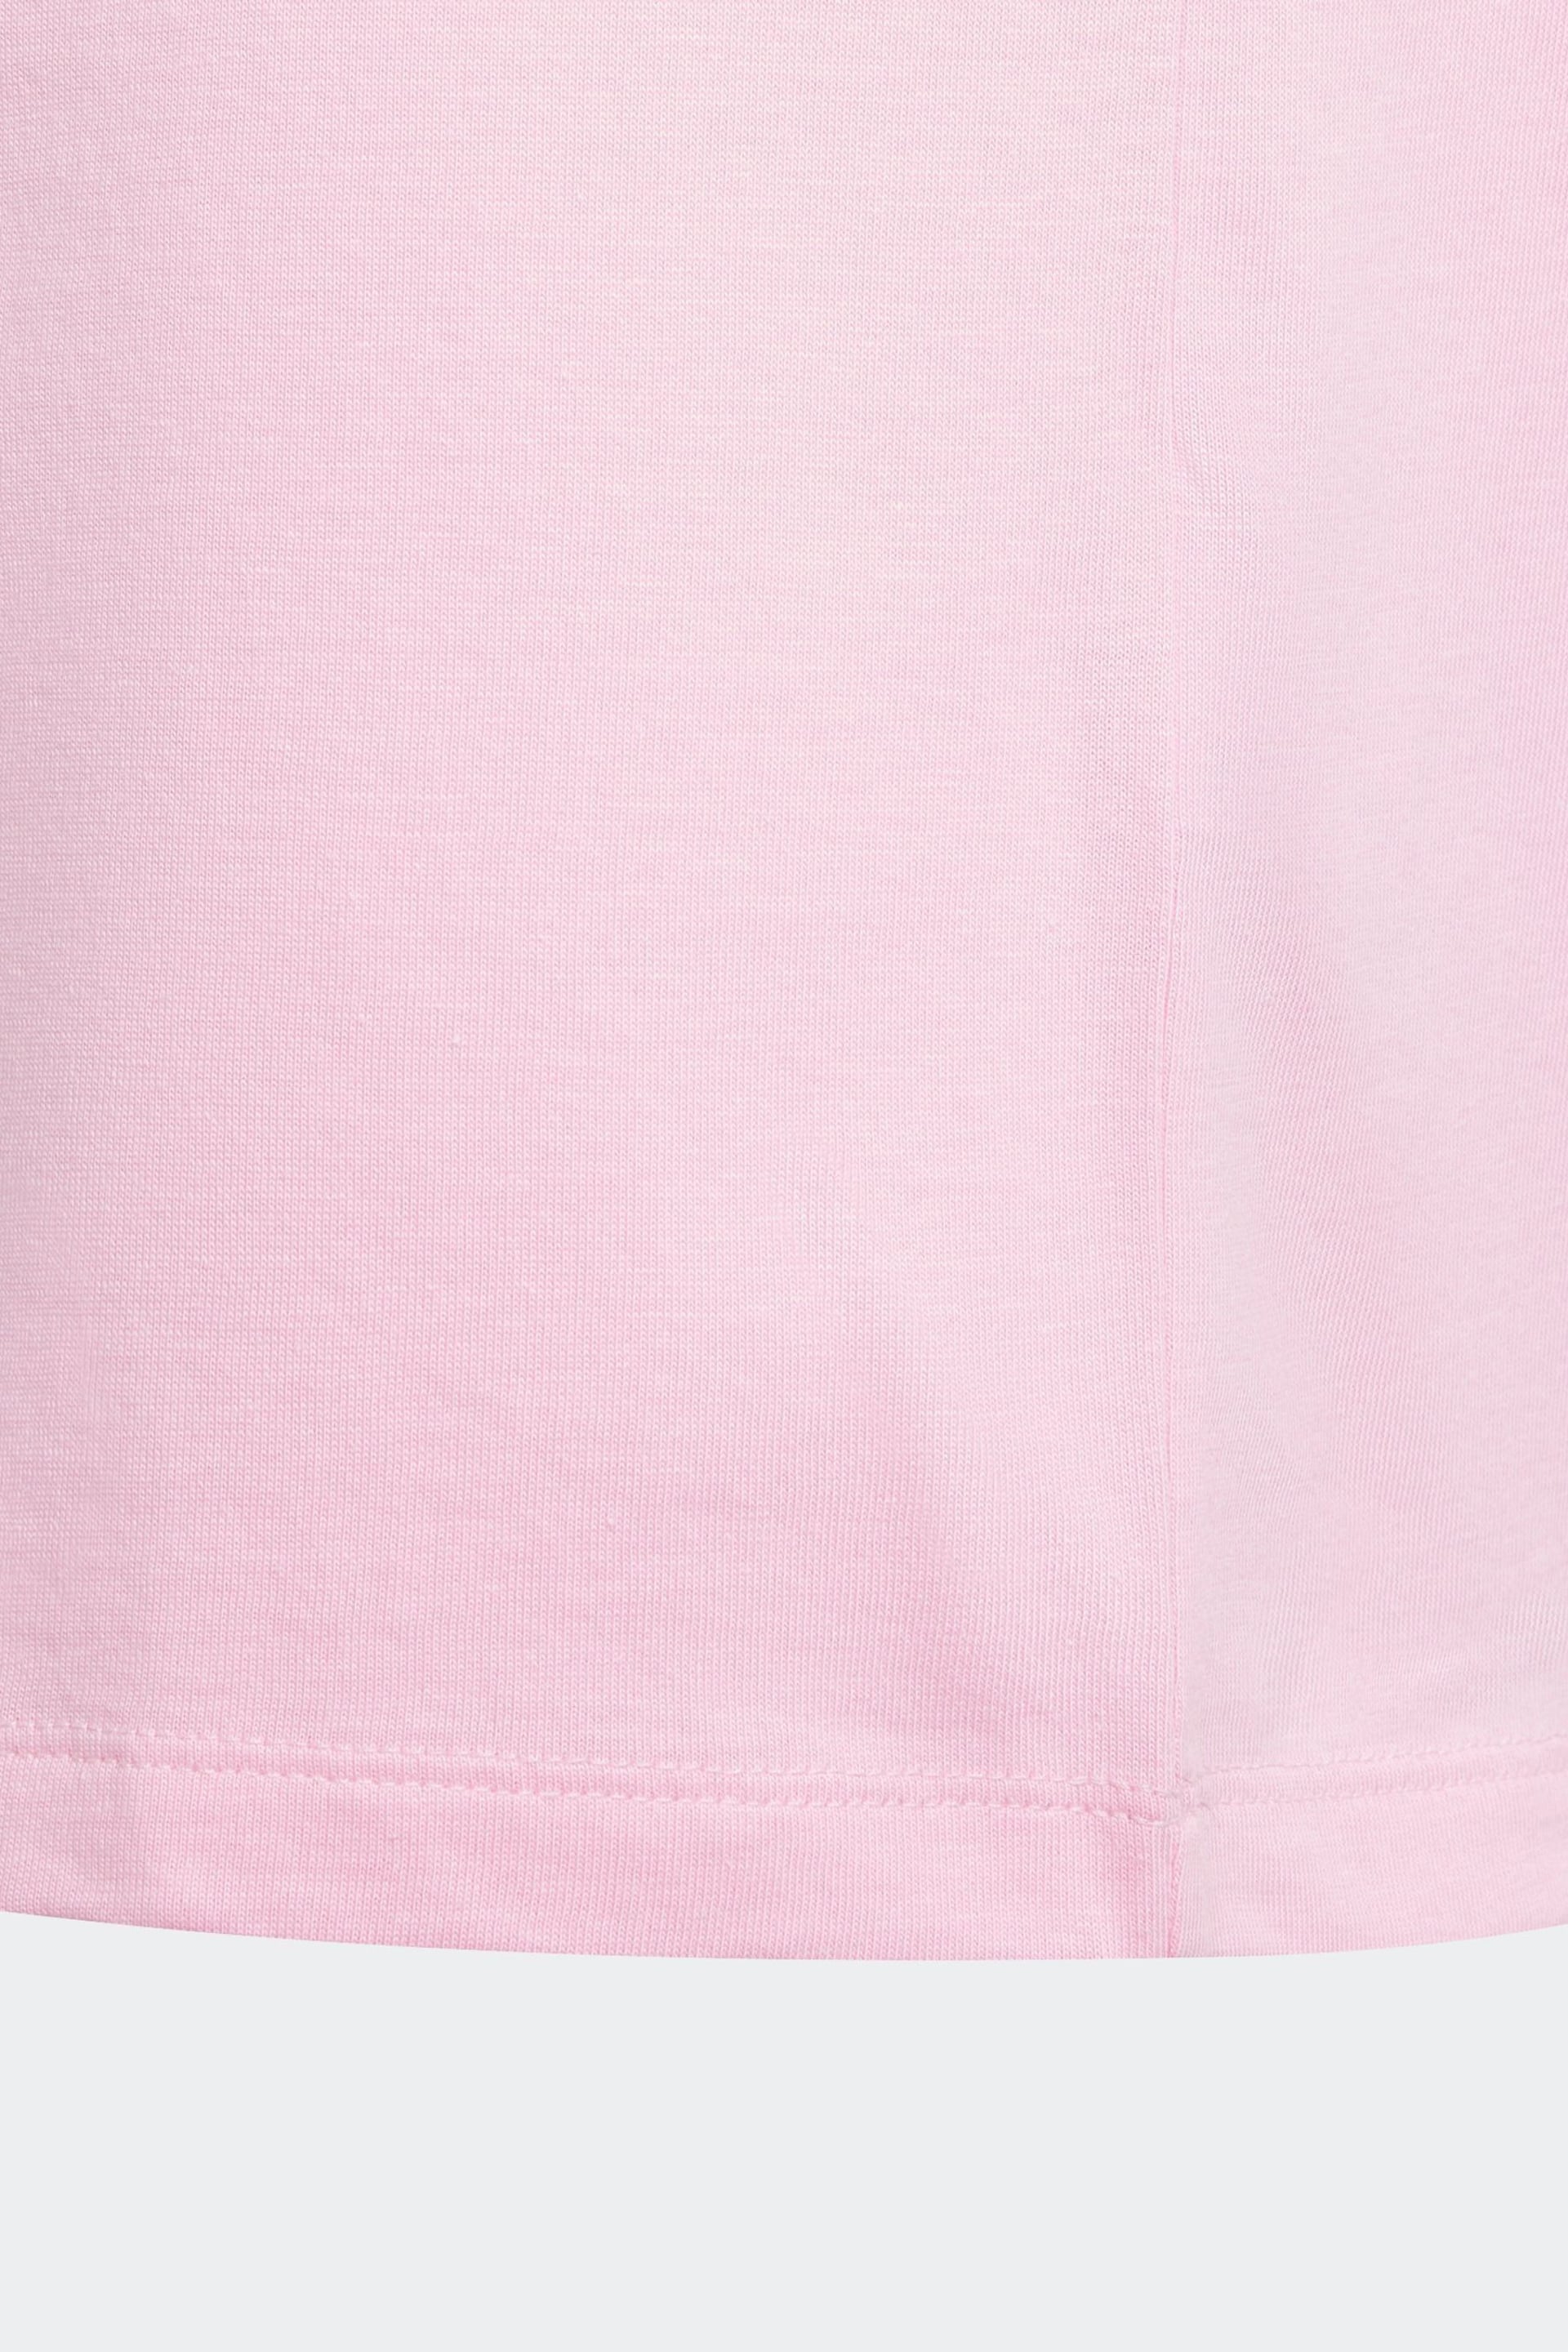 adidas Originals Light Pink Adicolor T-Shirt - Image 5 of 5